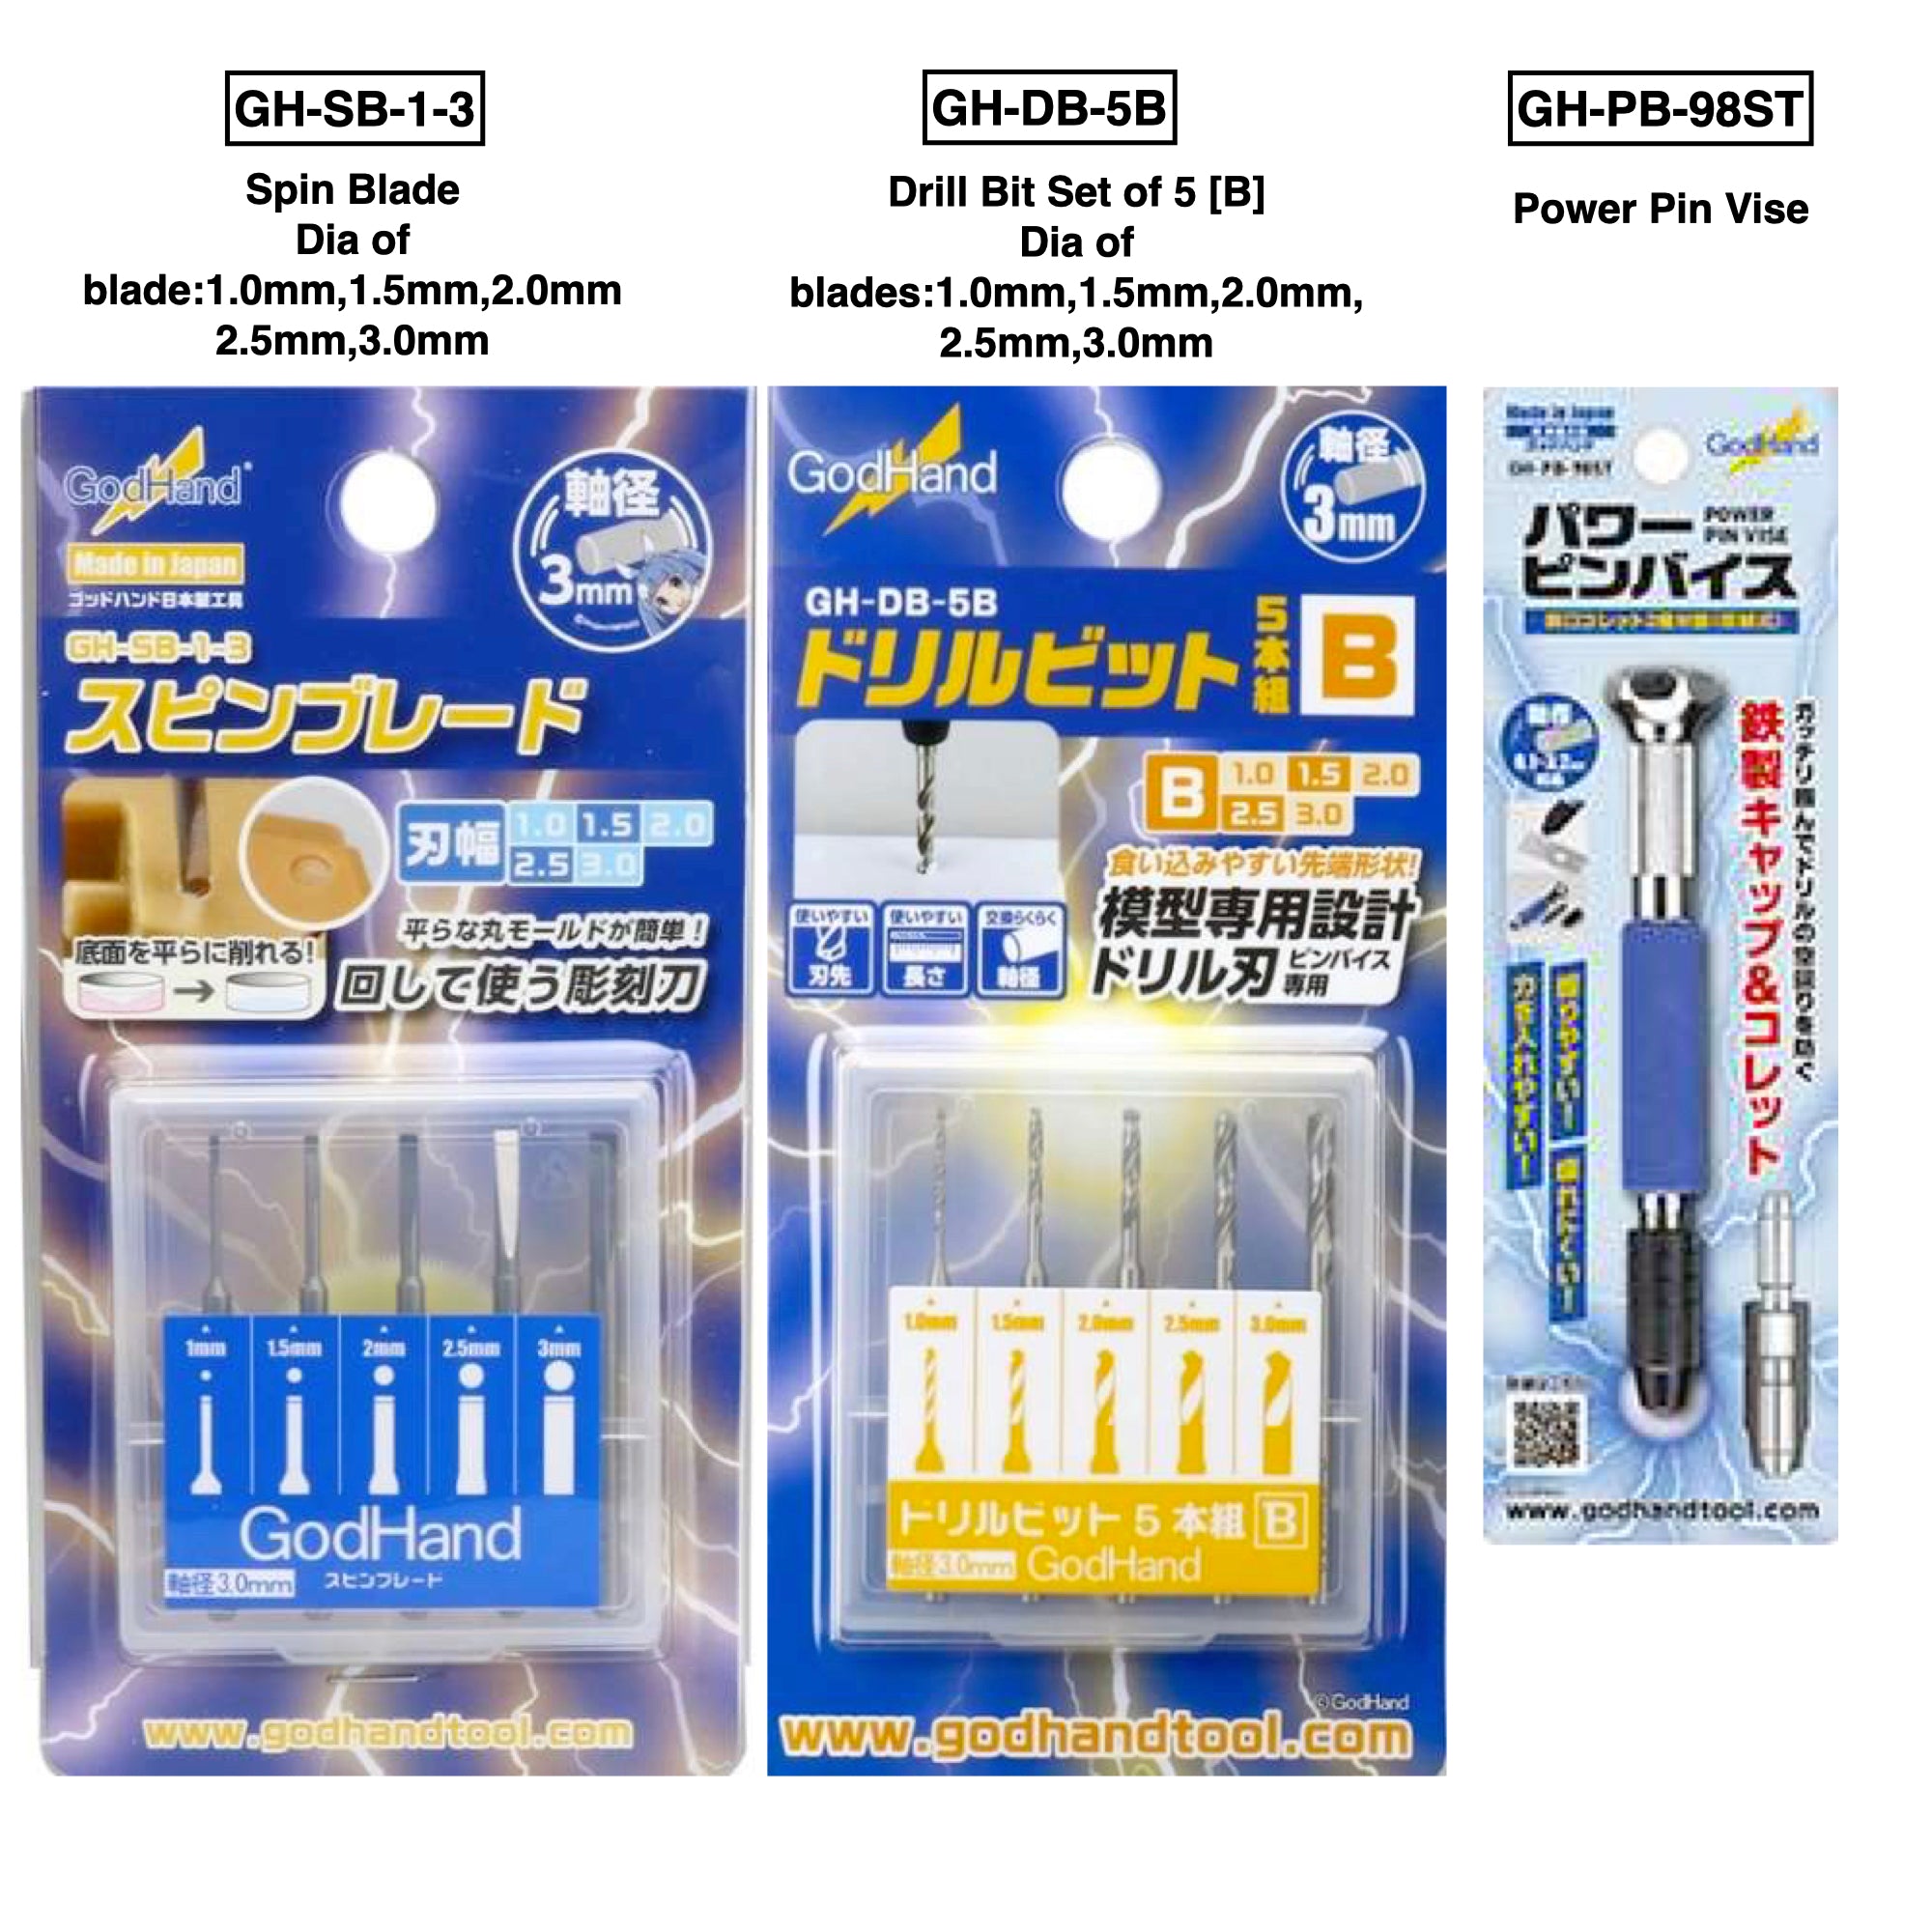 GodHand GH-SPN-120 and Kamiyasu-Sanding Stick 3mm Limited Set